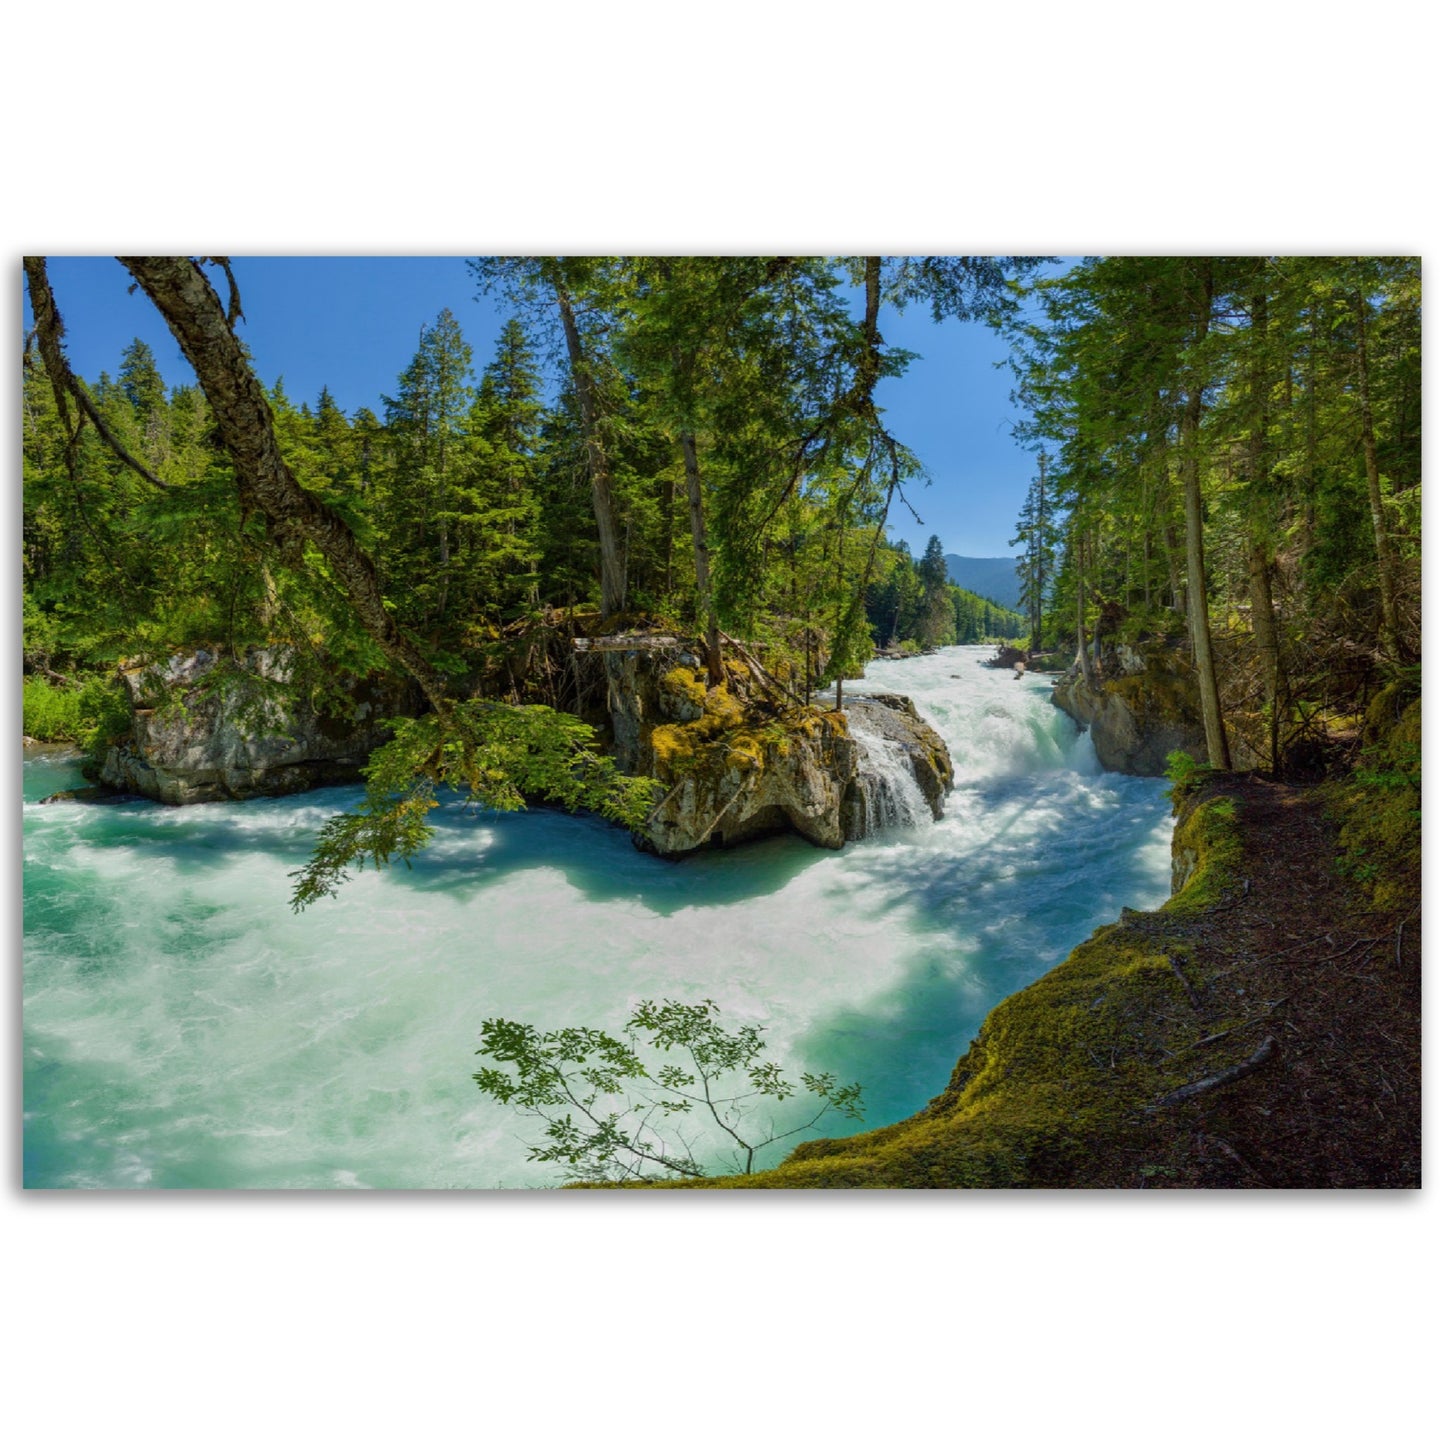 Cheakamus River Waterfall - Whistler, BC - Canadian Wilderness Aluminum / Metal Print